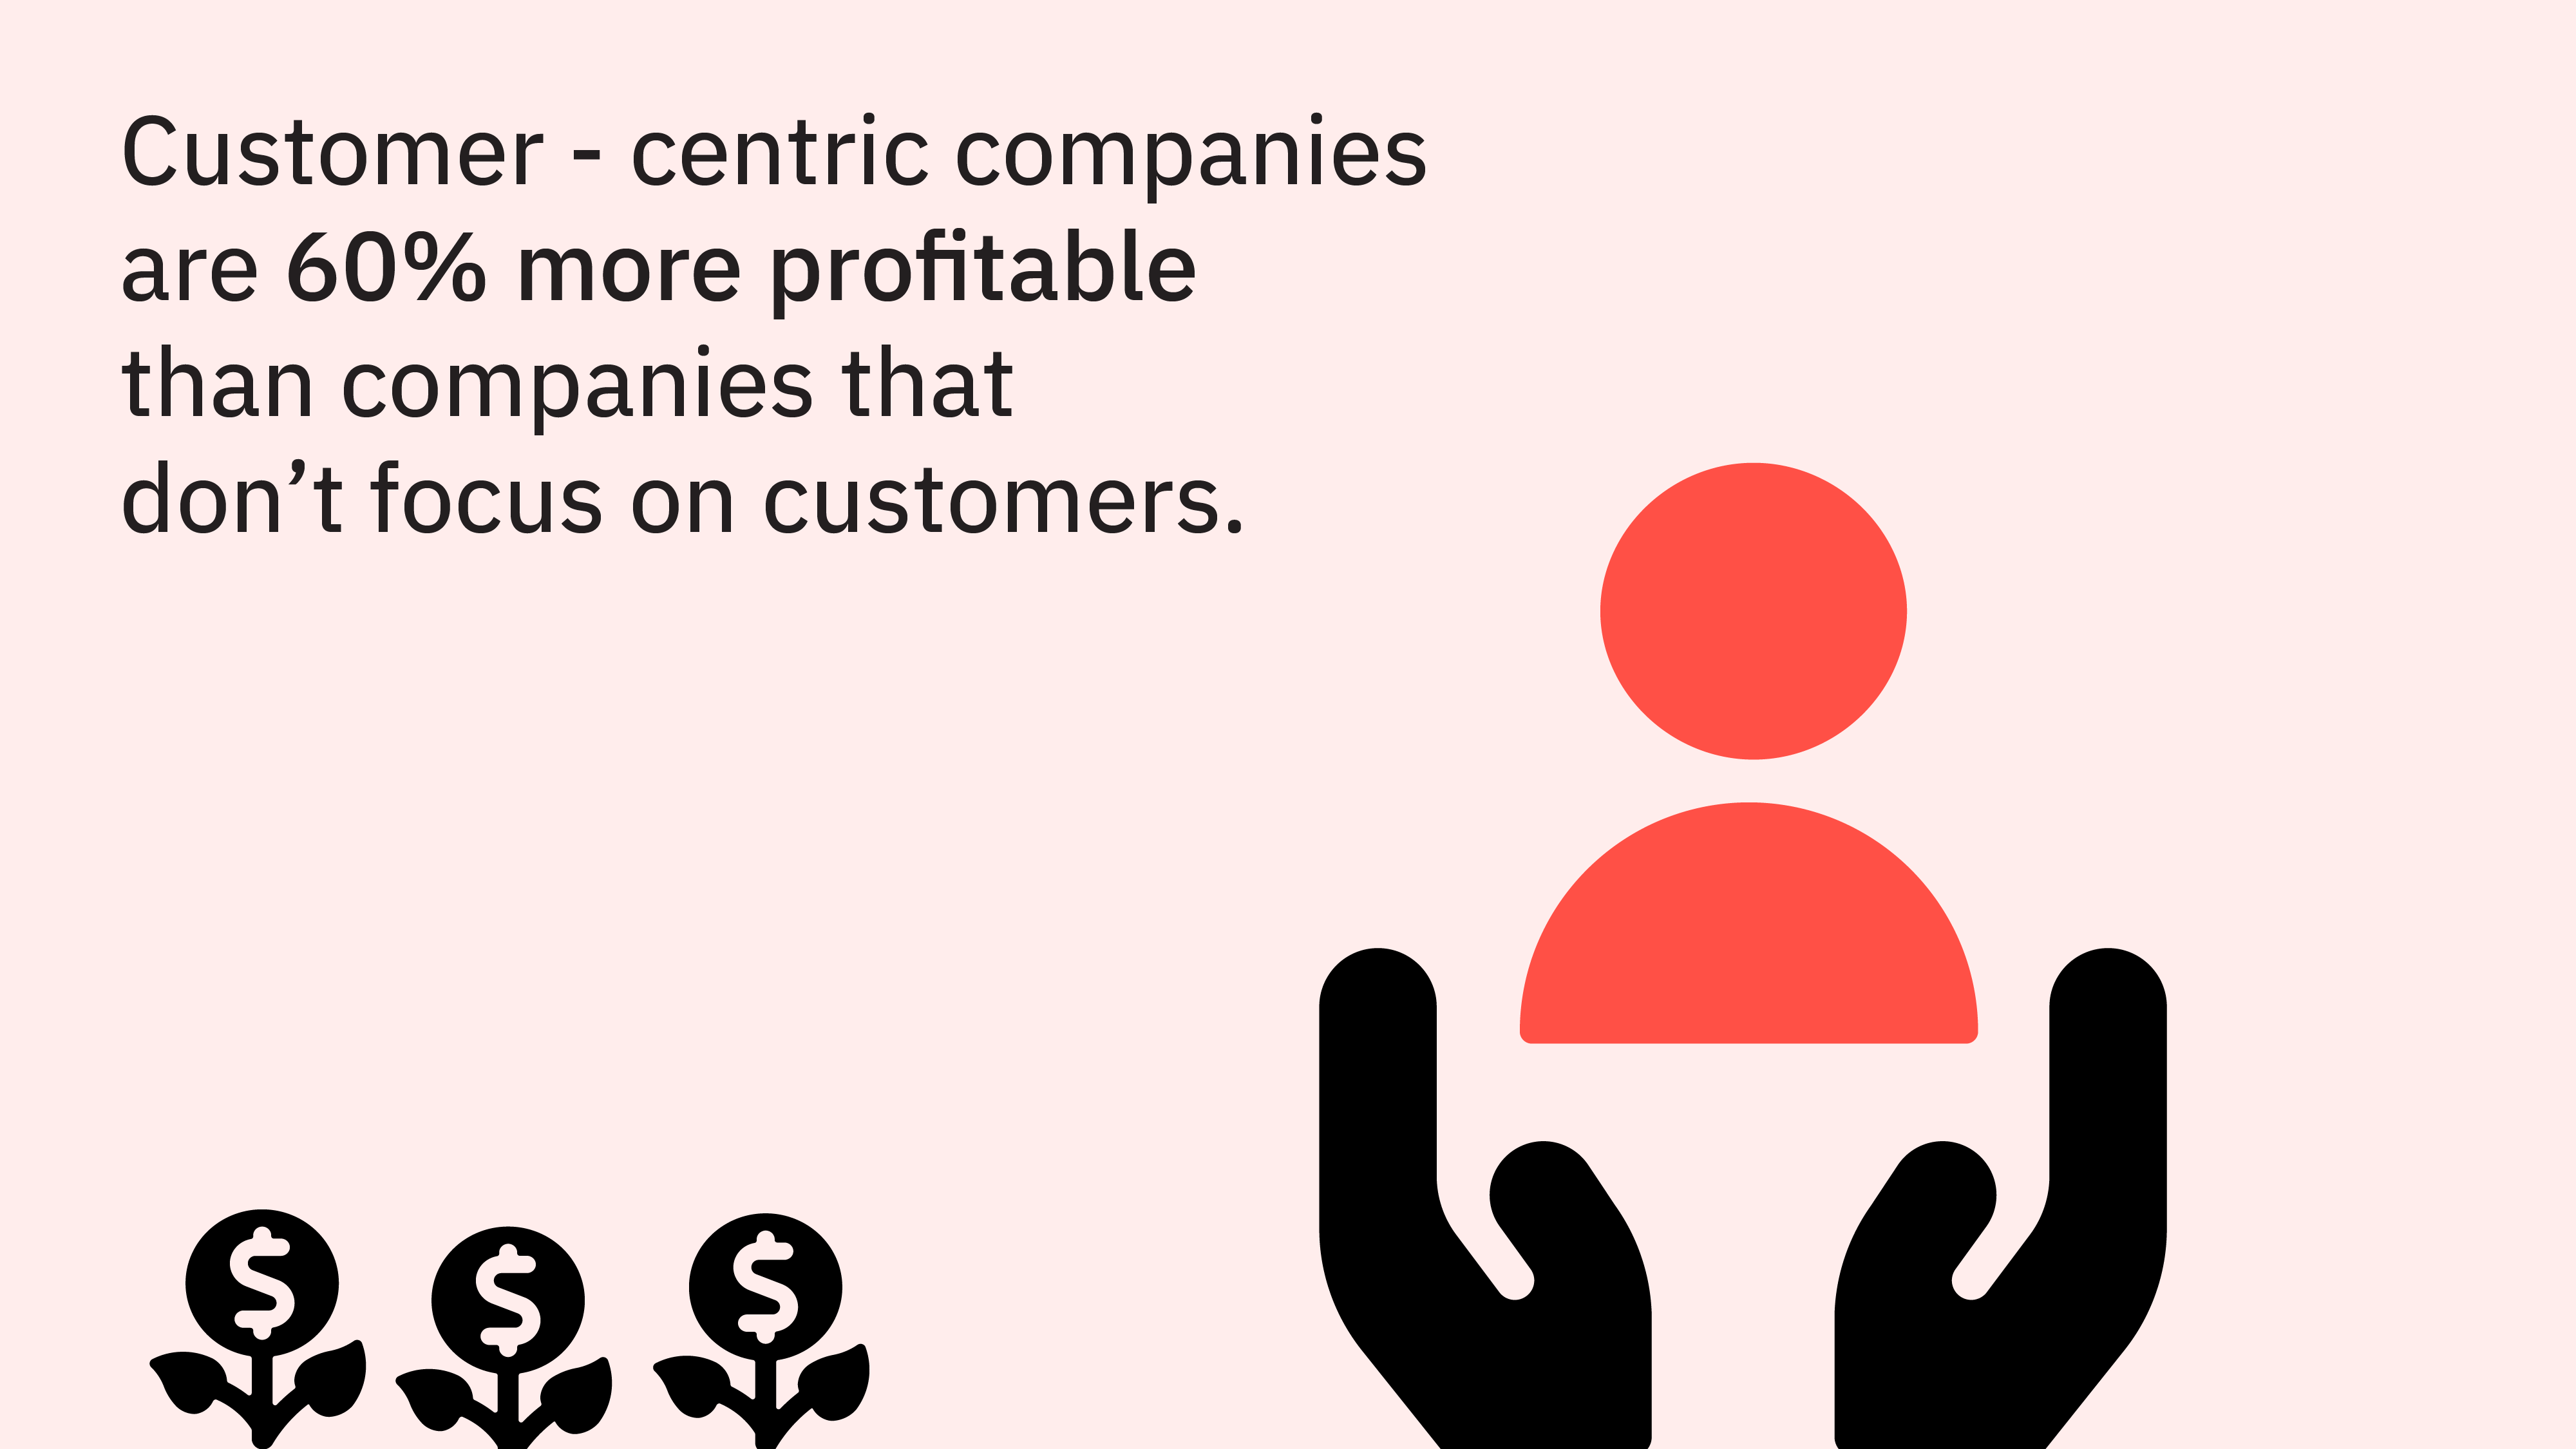 Customer-centric companies are 60% more profitable.